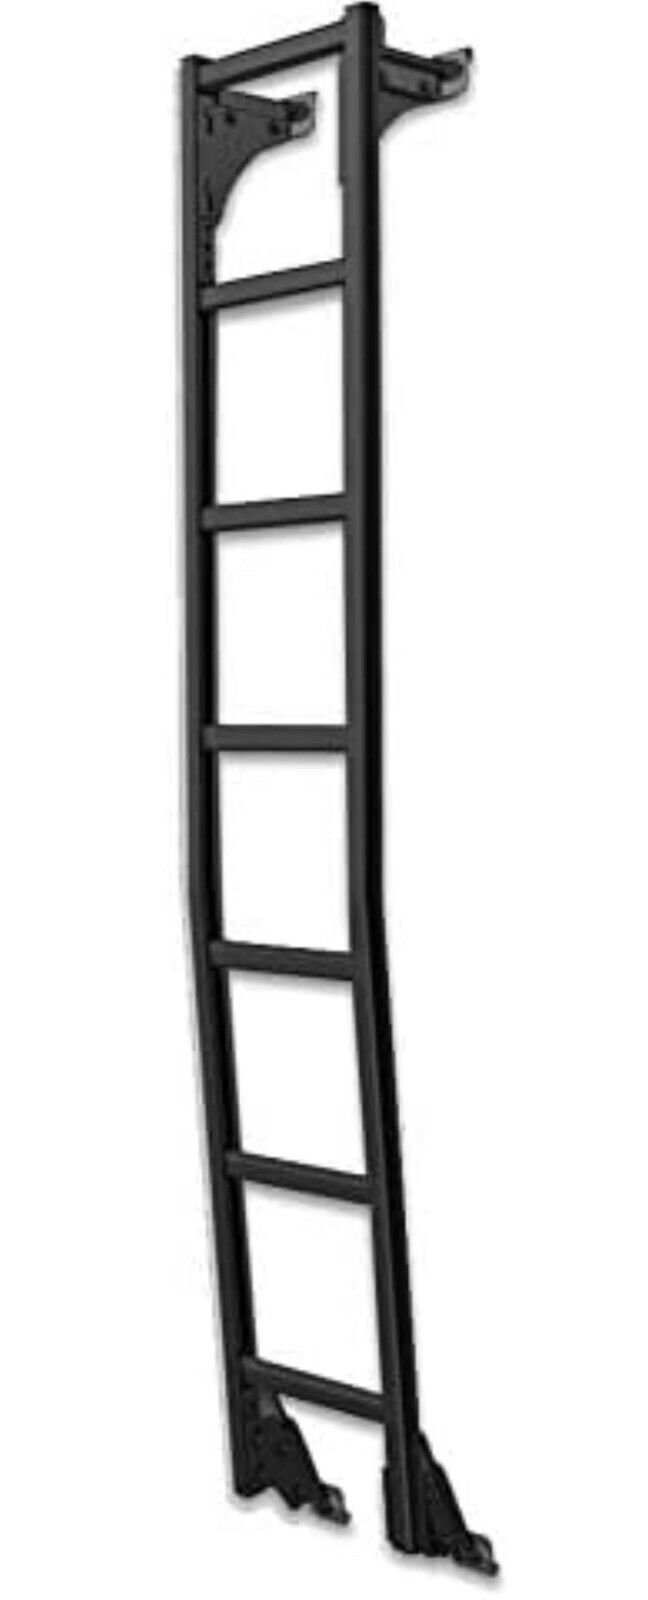 2015-24 Ford Transit High Roof Prime Design Aluminum Rear Ladder - Black Finish